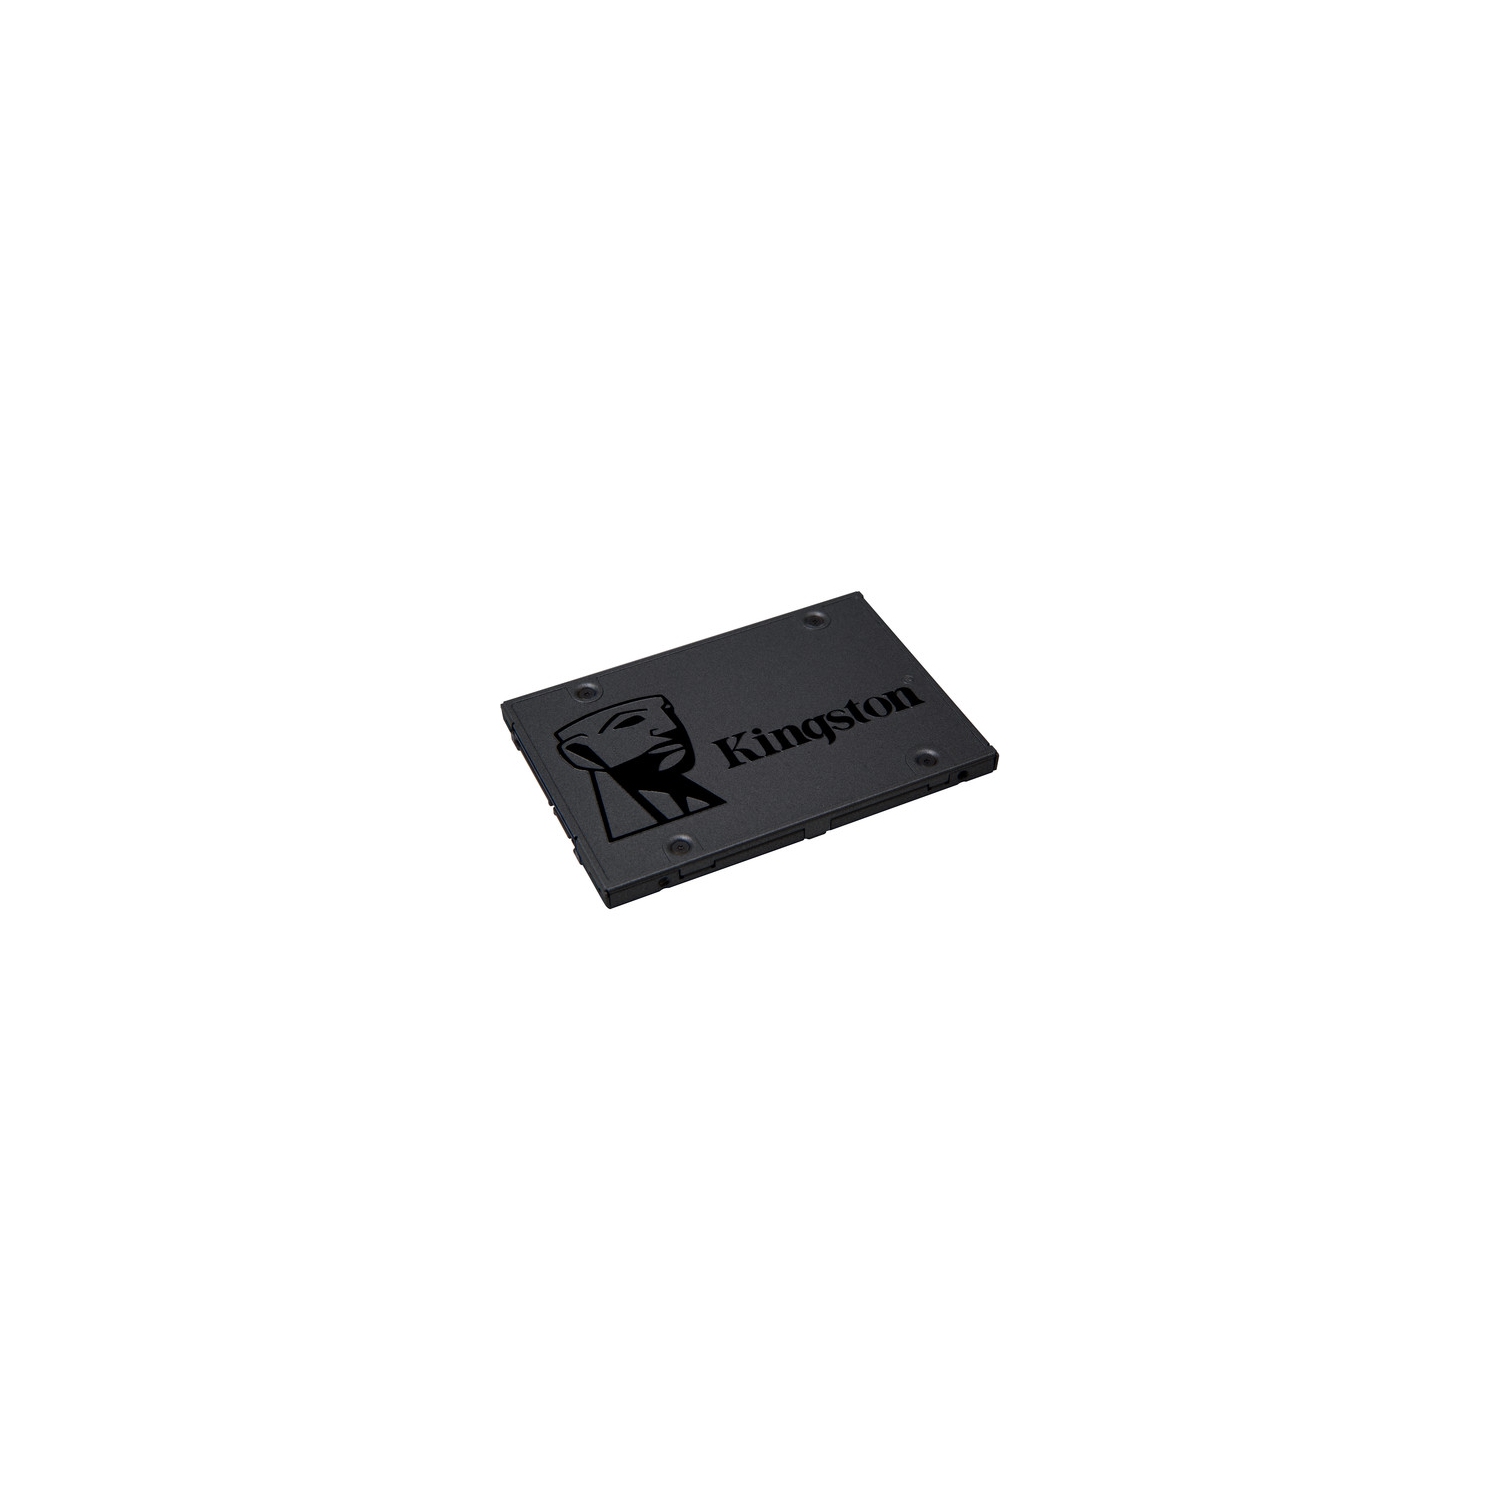 Kingston A400 SSD (480GB SA400S37/480G) - Brand New